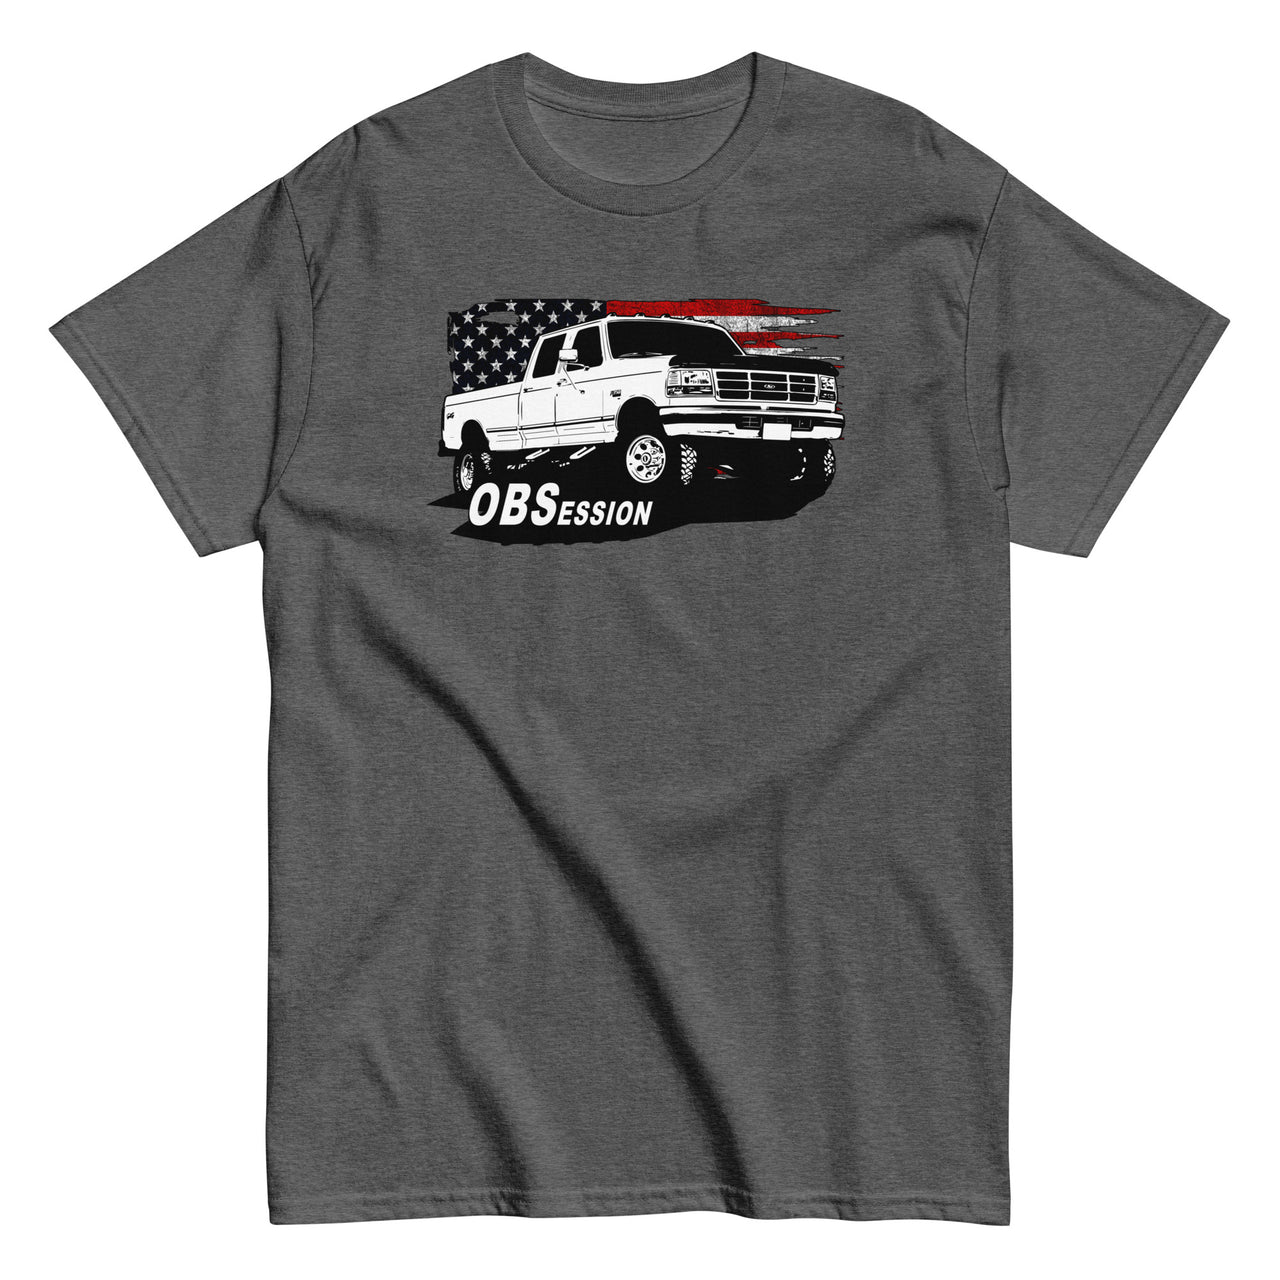 OBS Crew Cab Truck American Flag T-Shirt in grey